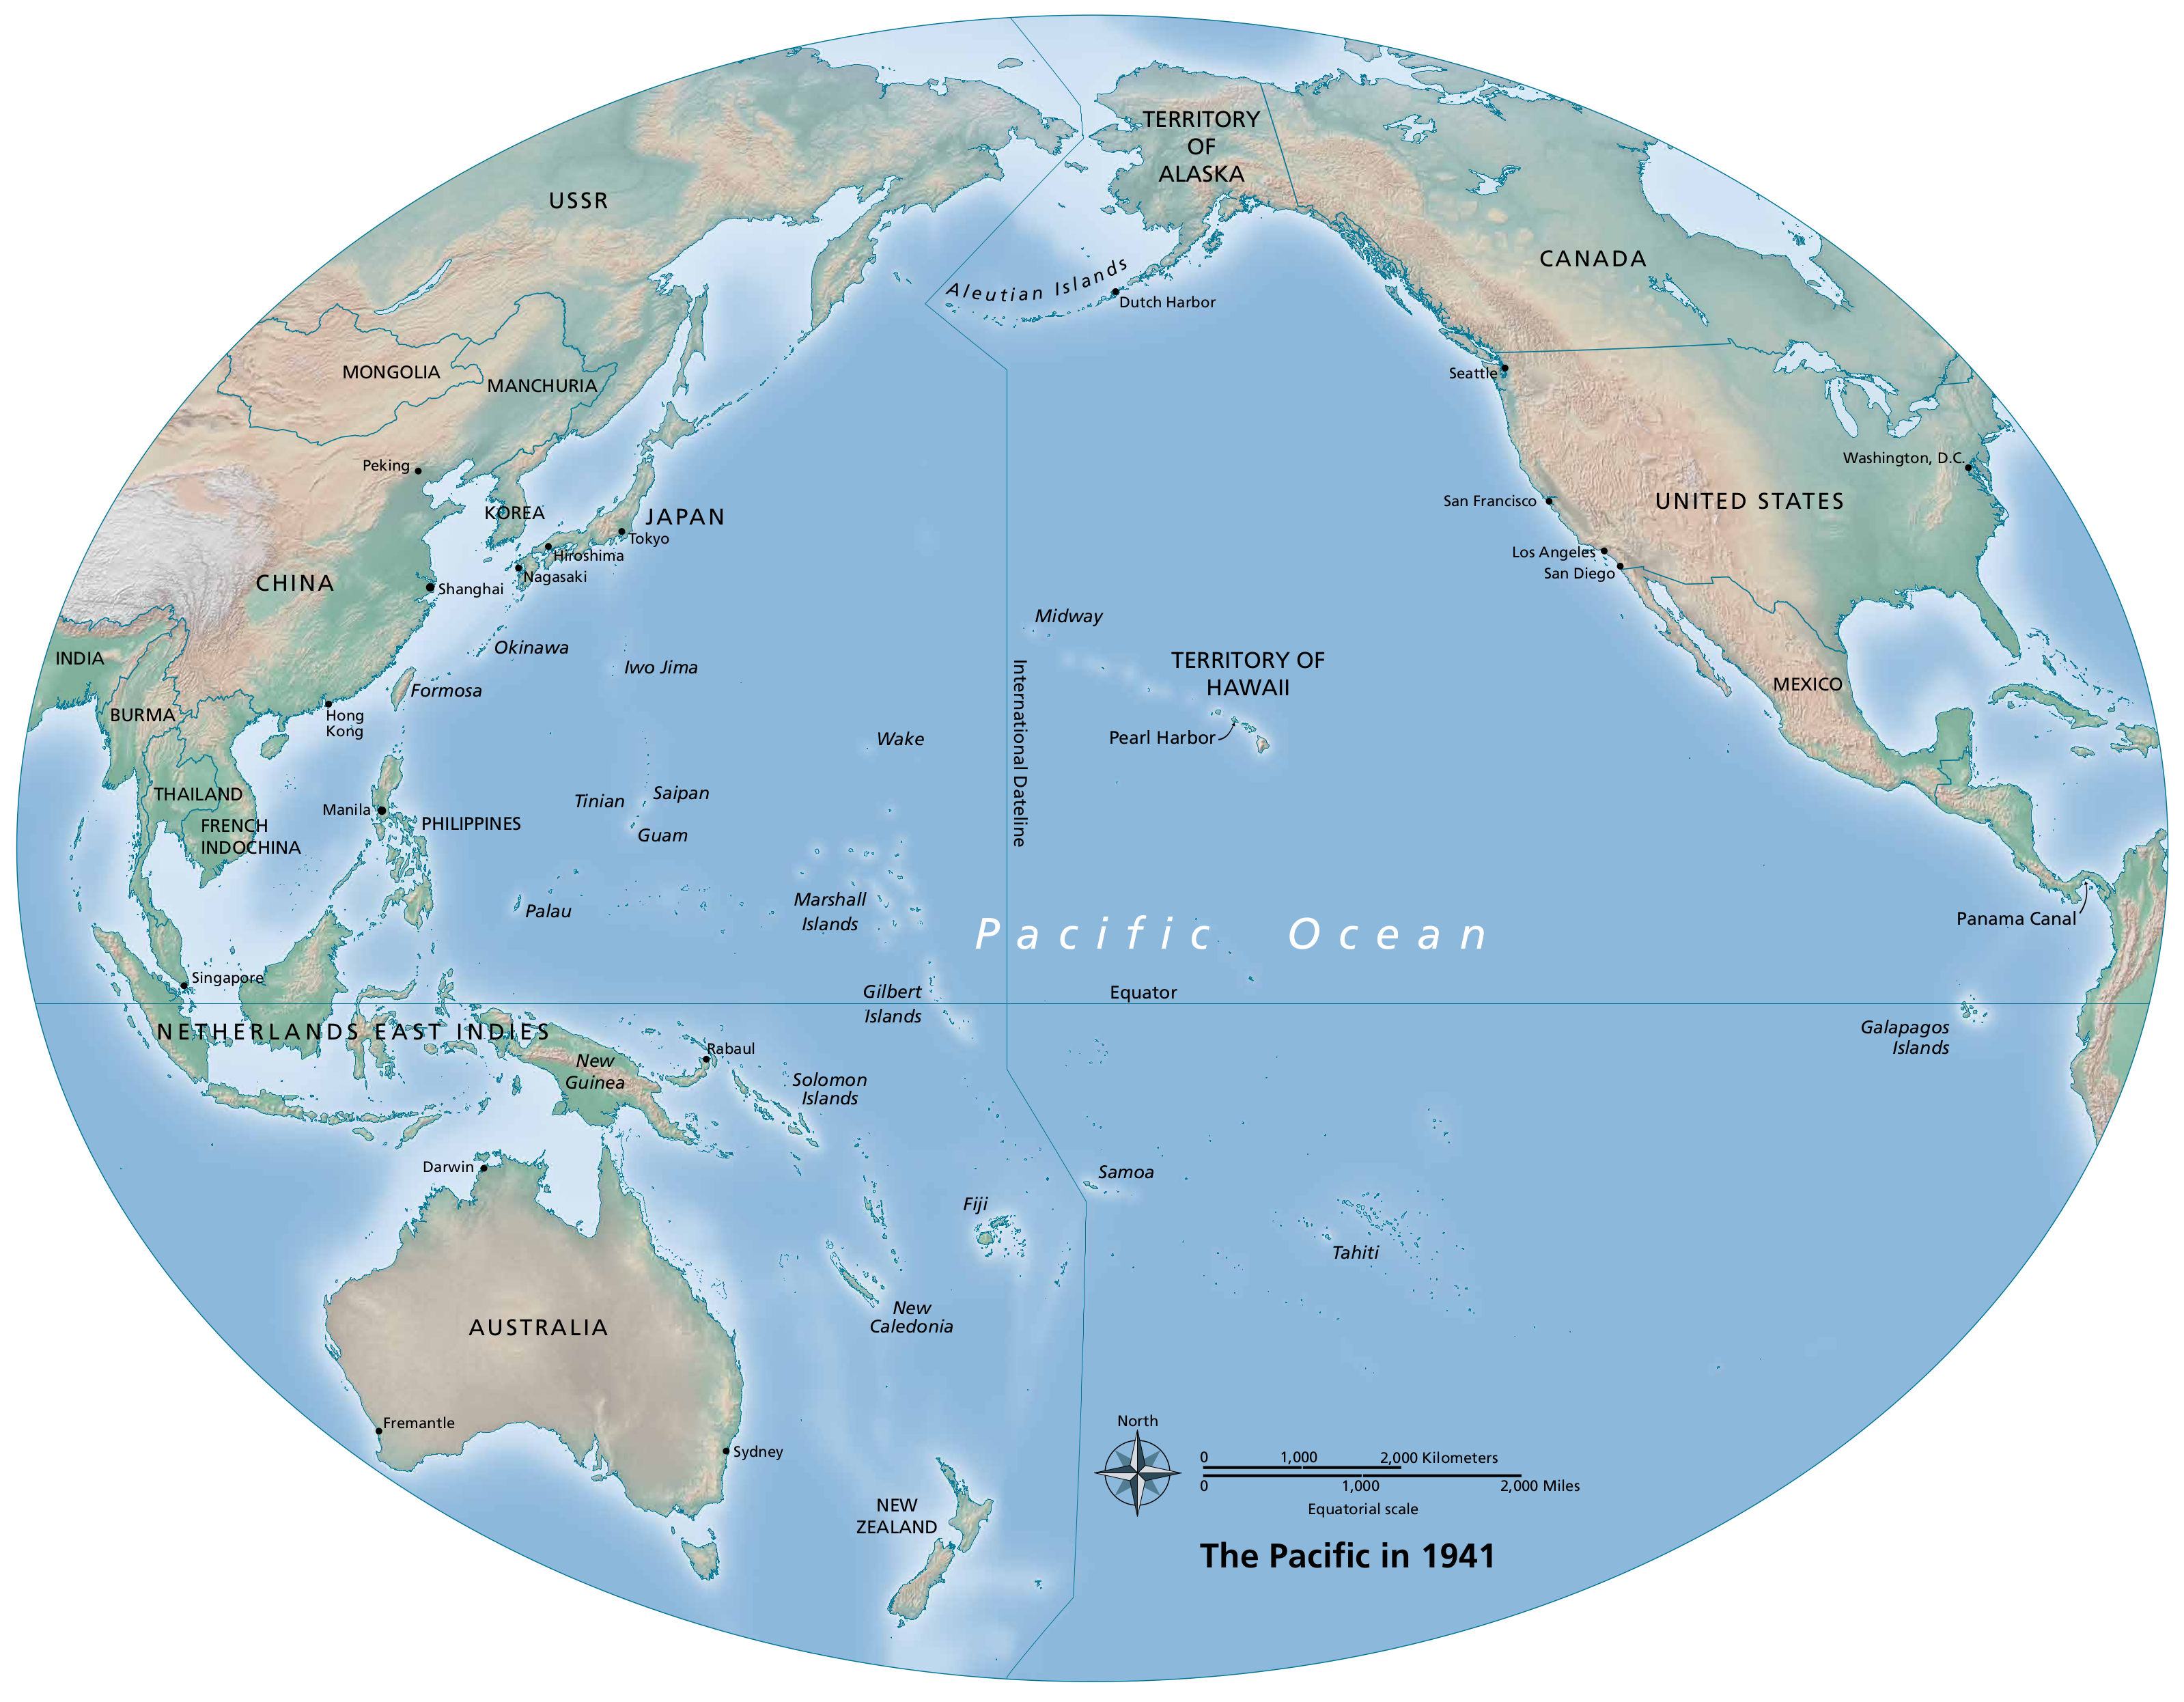 Pearl Harbor Location On World Map